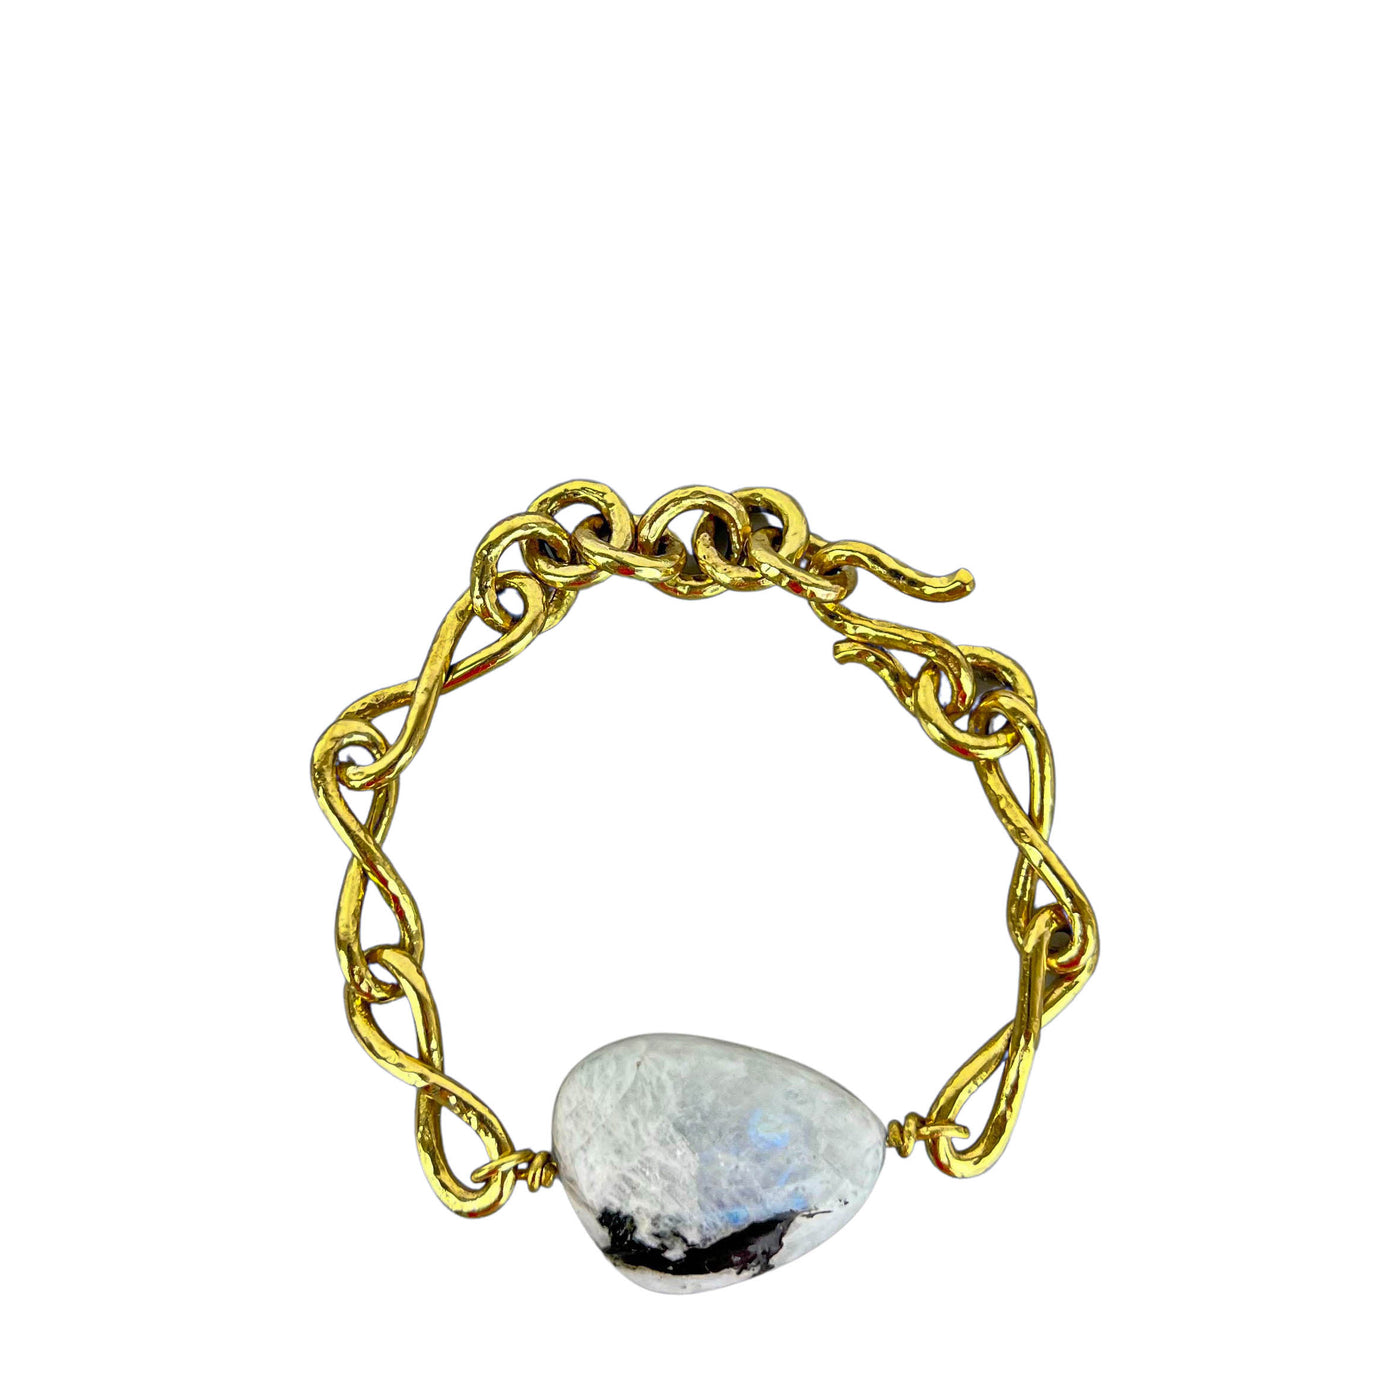 Ulla Johnson Tumbled Stone Bracelet in White Ocean Jasper - Discounts on Ulla Johnson at UAL